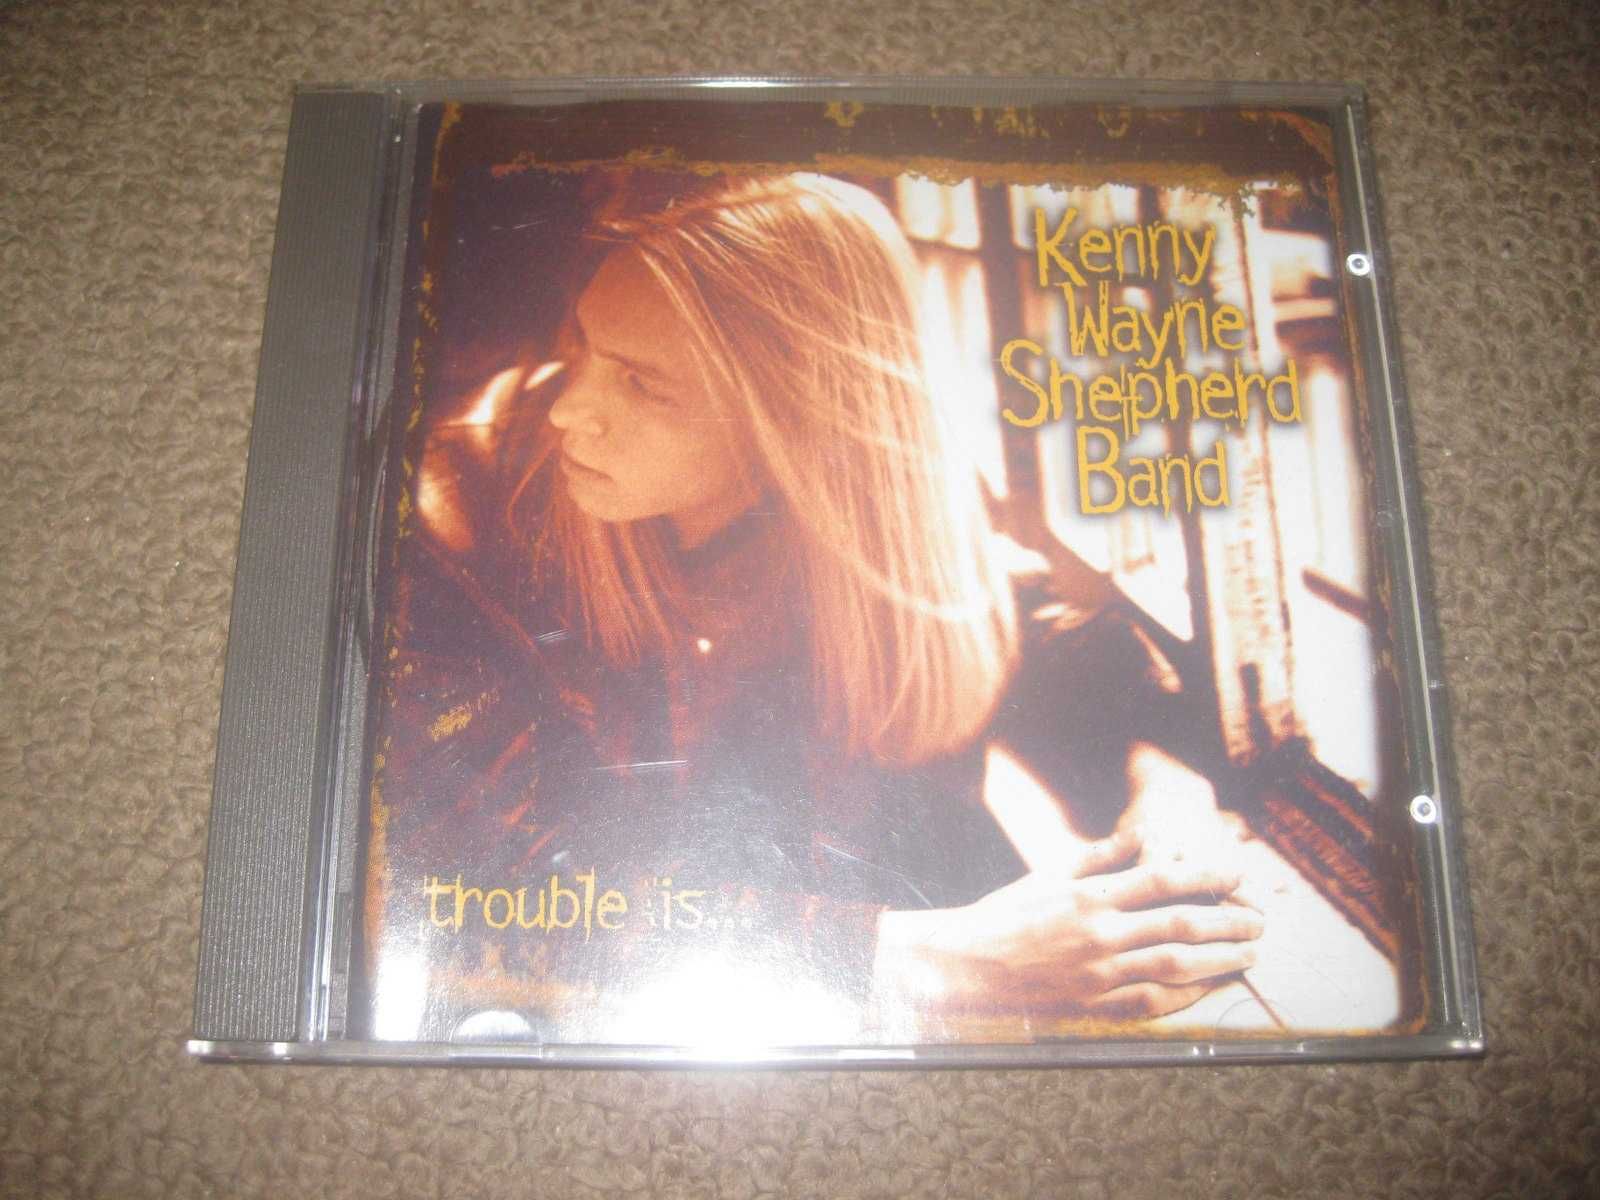 CD do Kenny Wayne Shepherd "Trouble Is..." Portes Grátis!